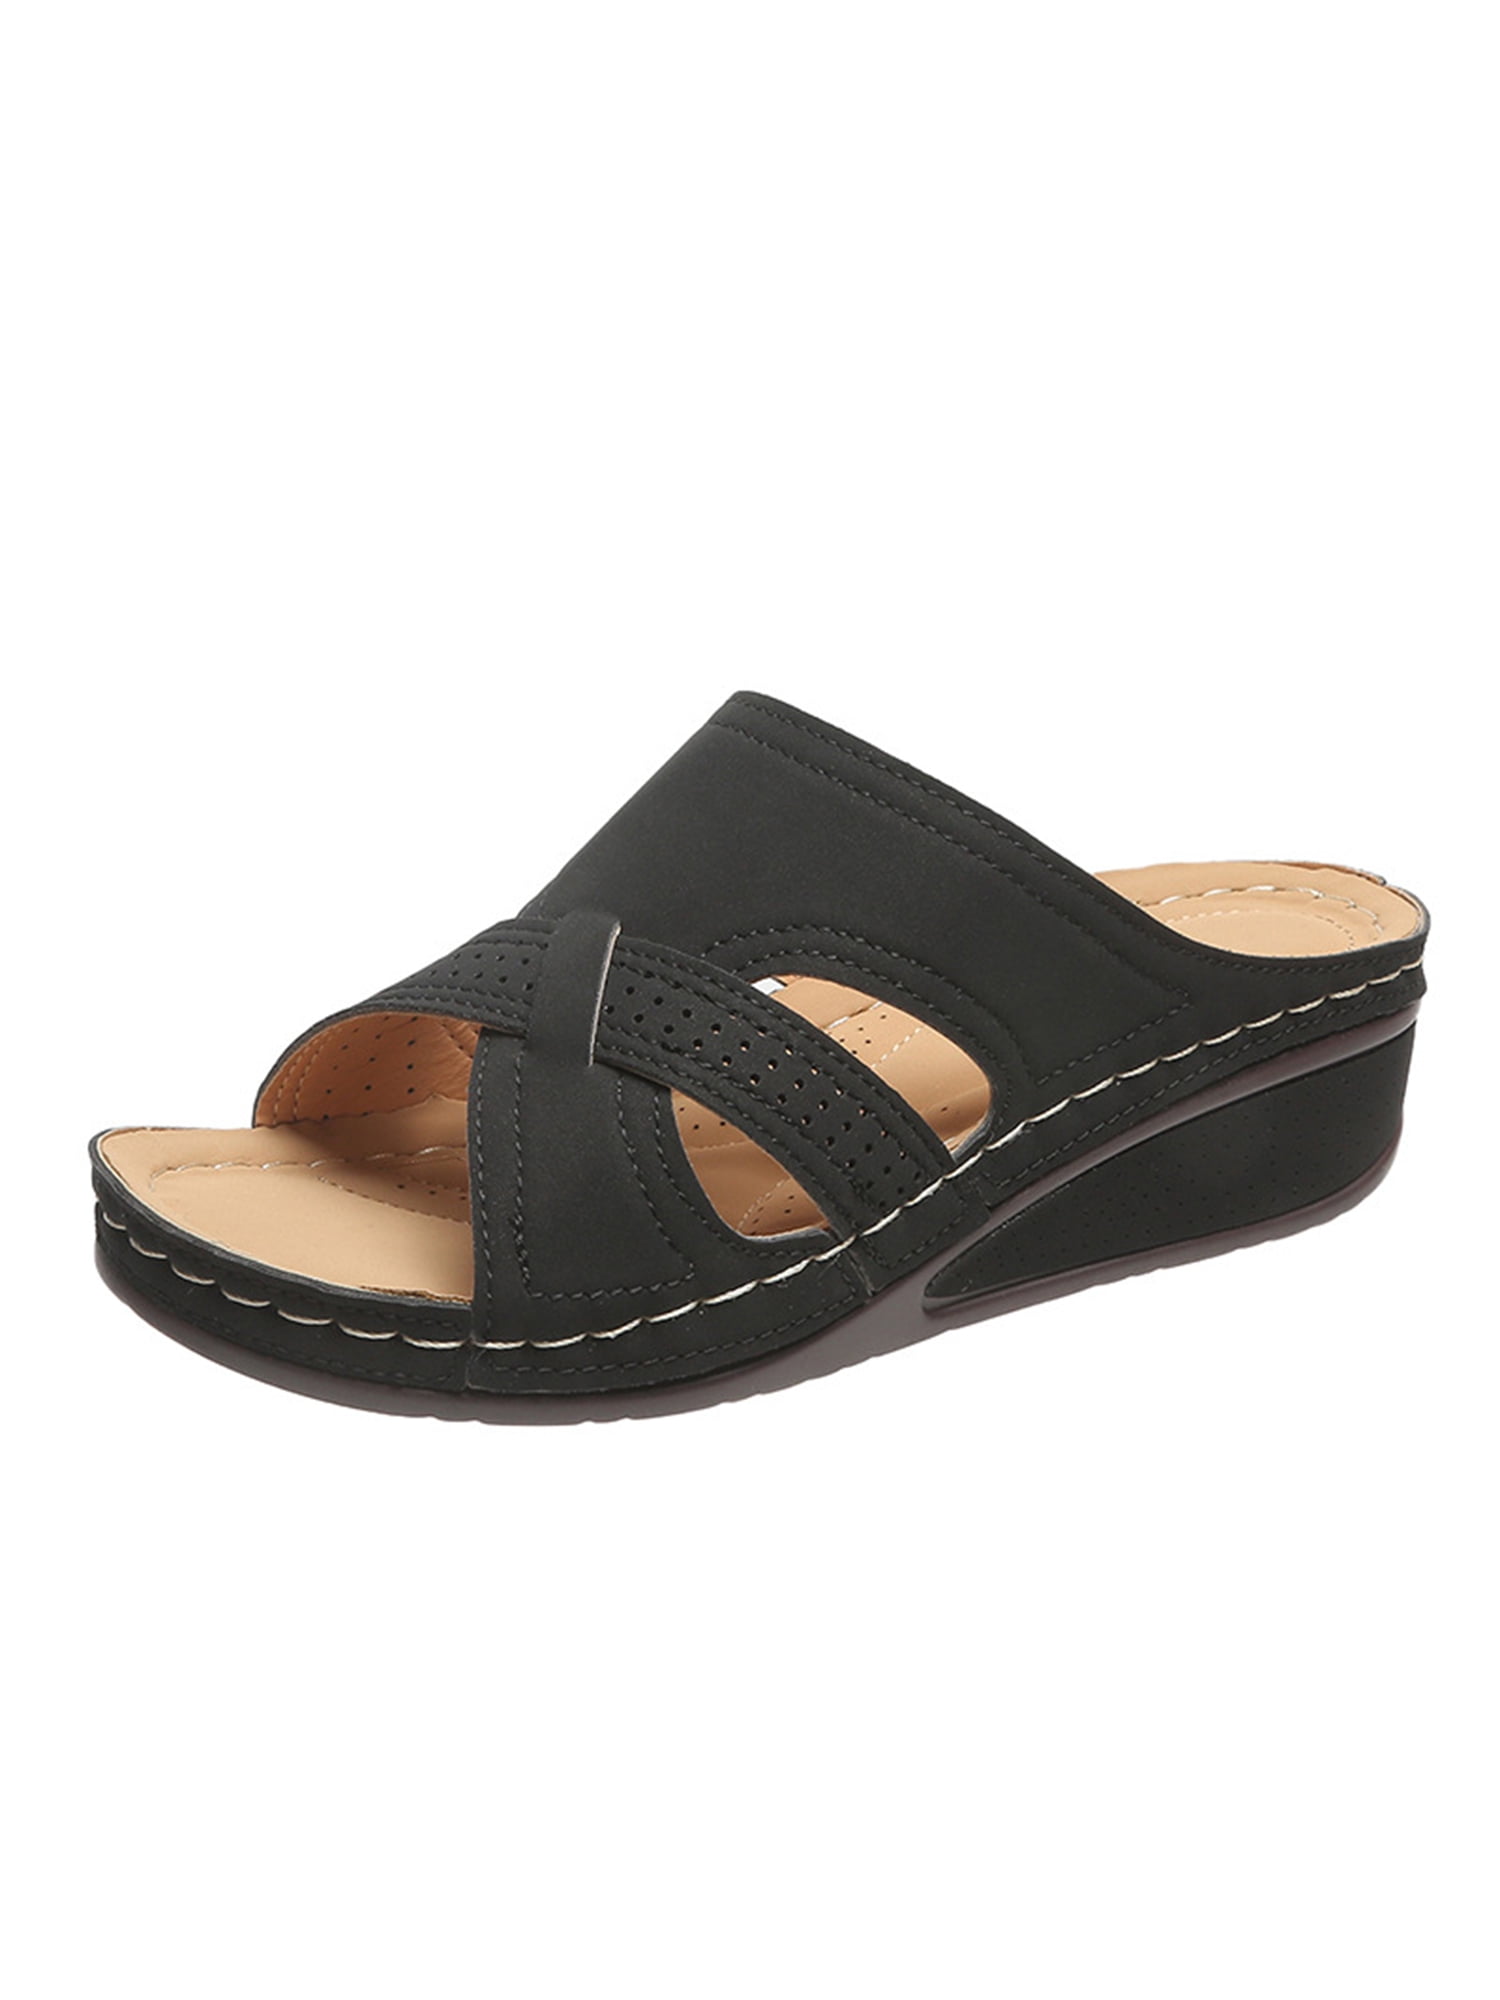 NIMIZIA Womens Sandals Clip Toe Platform Wedges Slope Heel Flip-Flops Slipper Elegant Casual Summer Beach Sandals for Women 